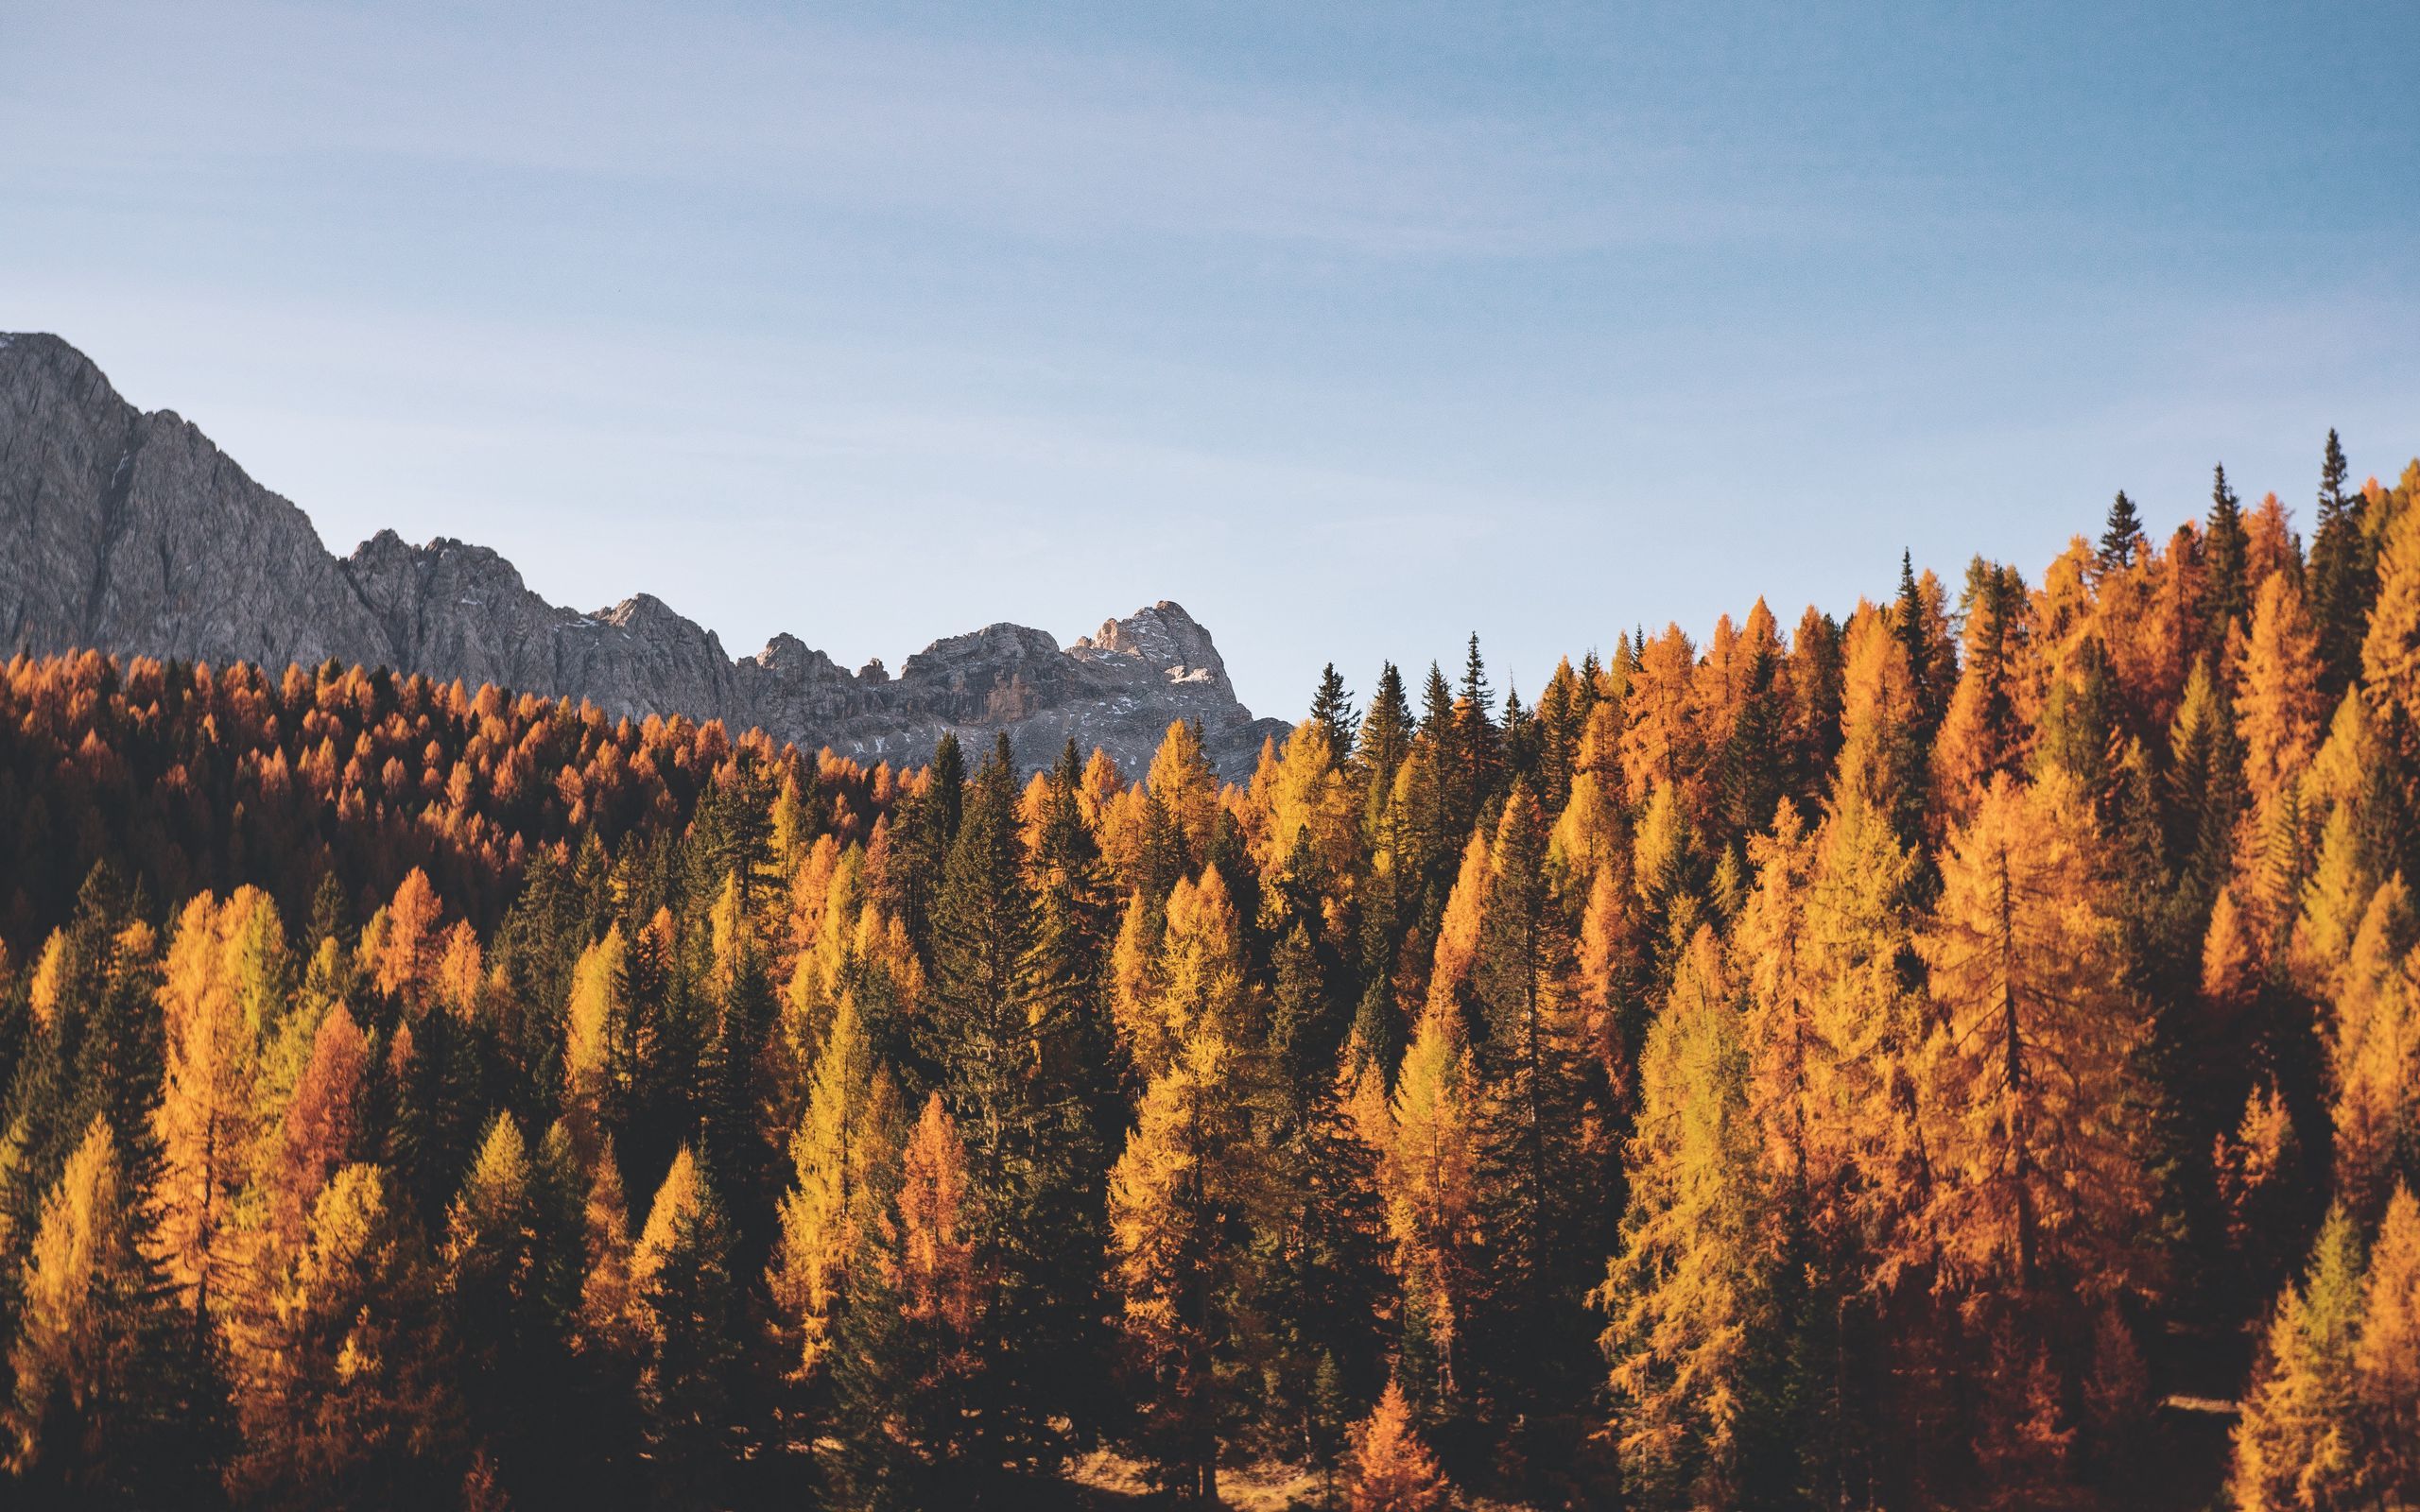 Download wallpaper 2560x1600 trees, autumn, mountains widescreen